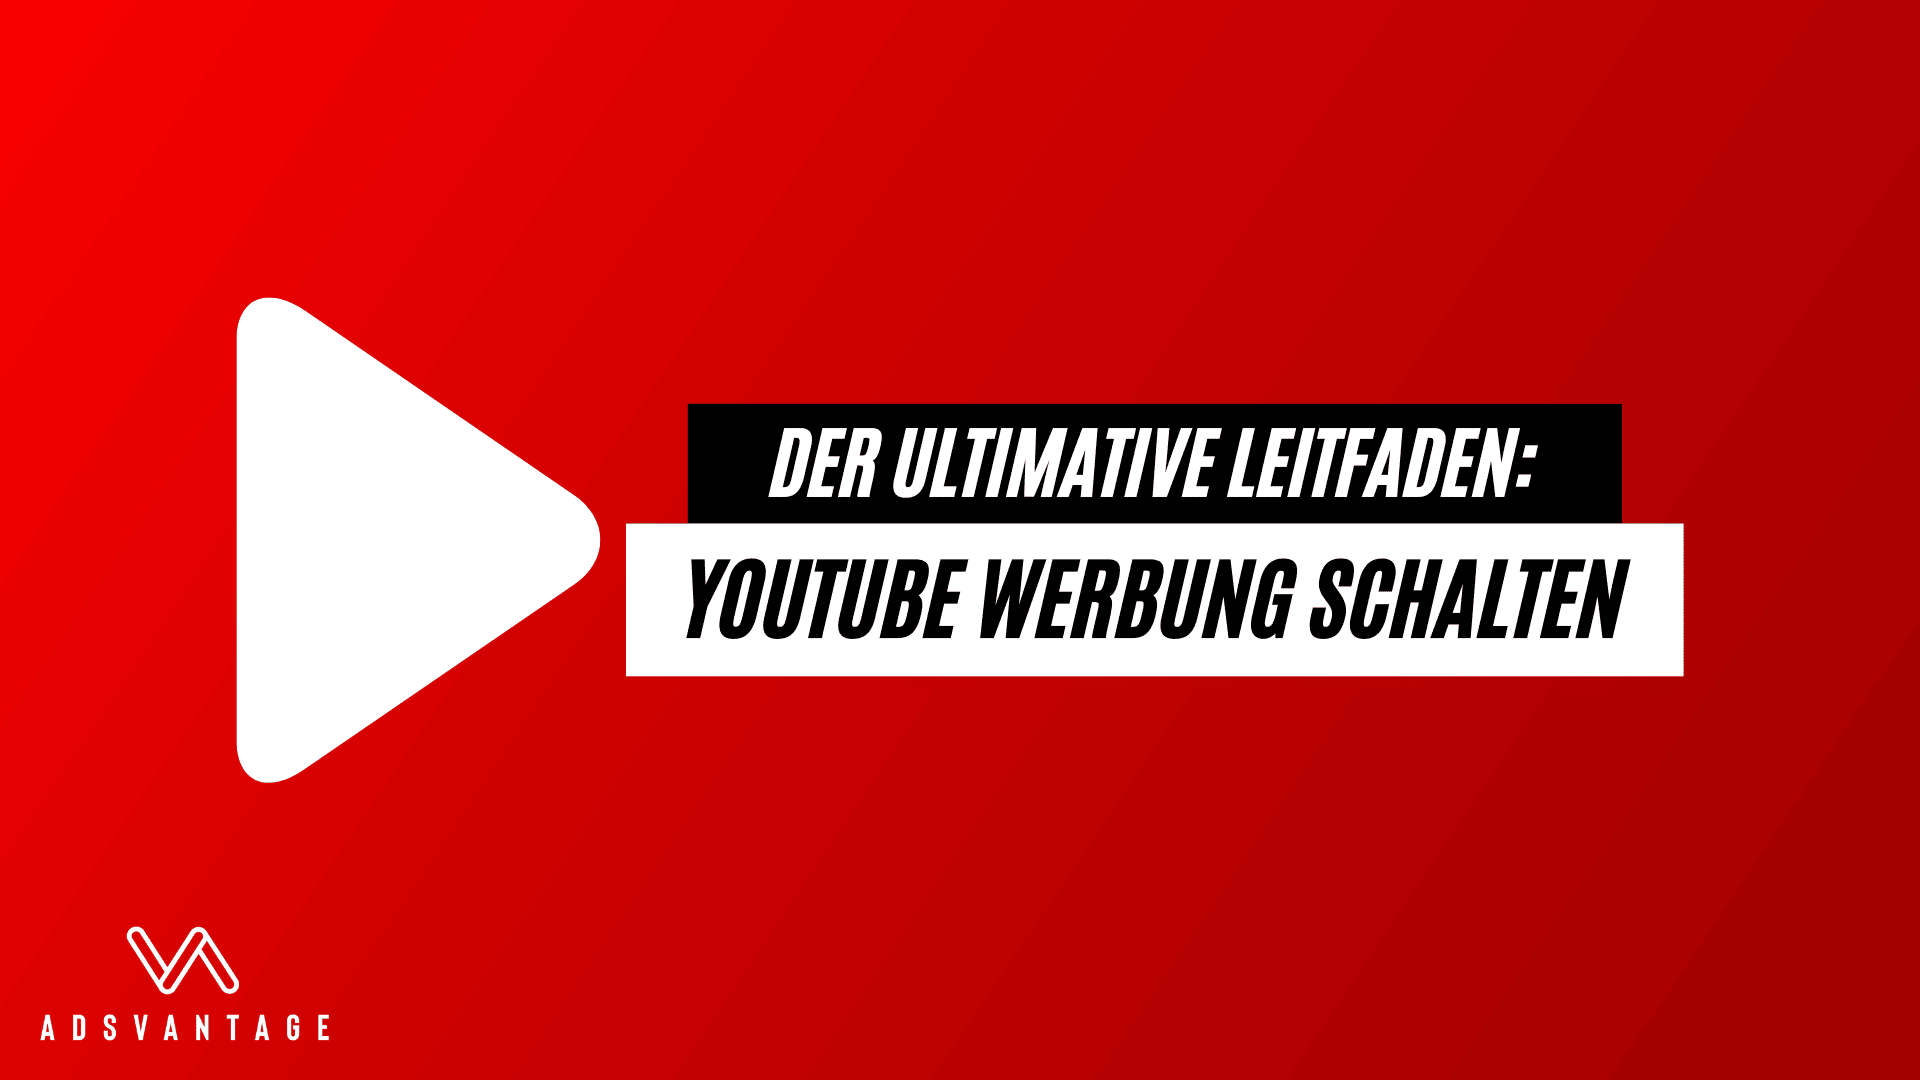 YouTube Werbung schalten: Der ultimative Leitfaden 2022